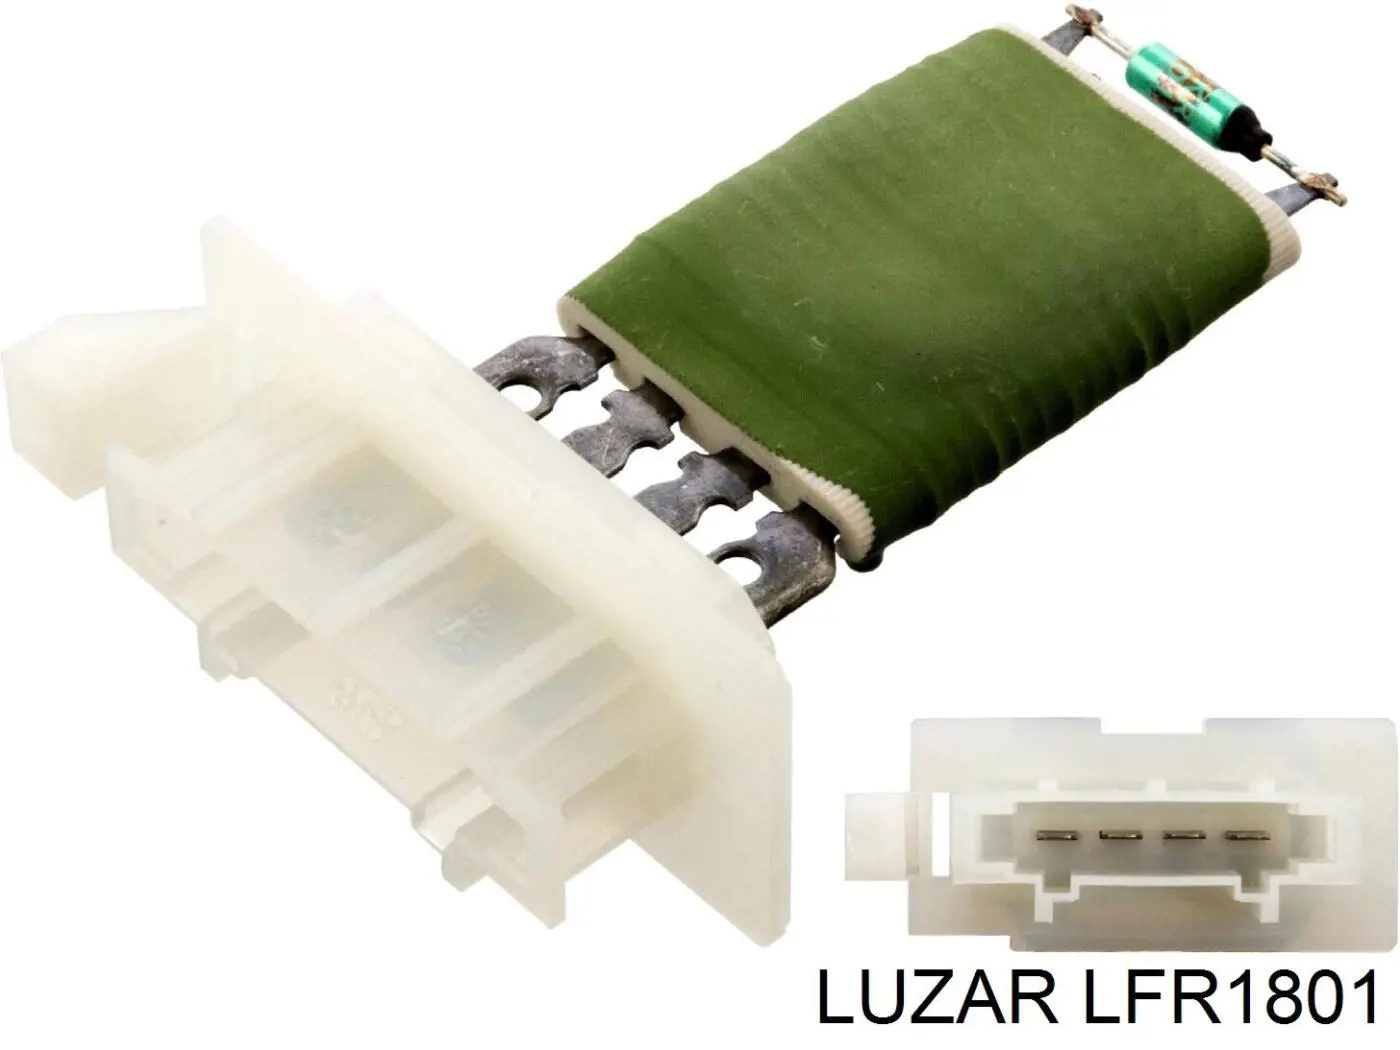 LFR 1801 Luzar resistor (resistência de ventilador de forno (de aquecedor de salão))